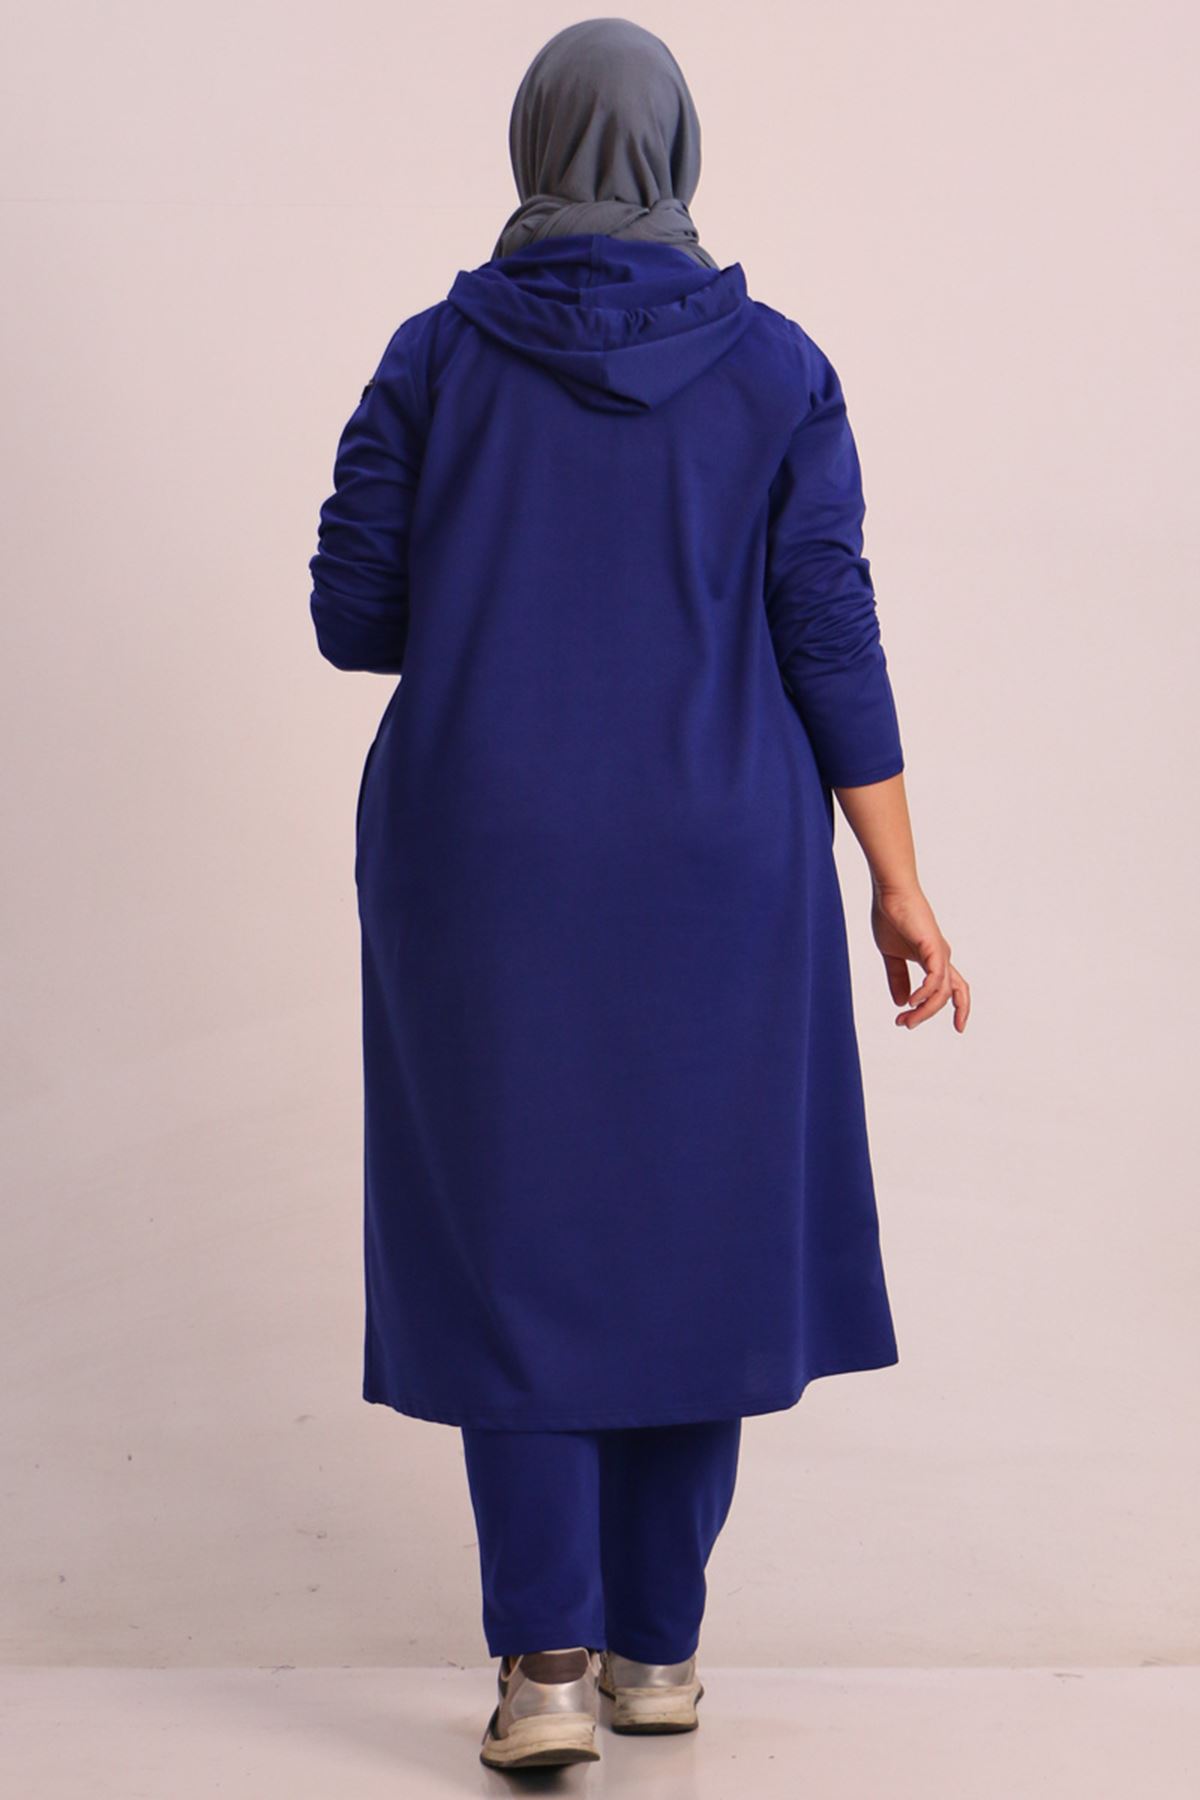 turtleneck dress hijab